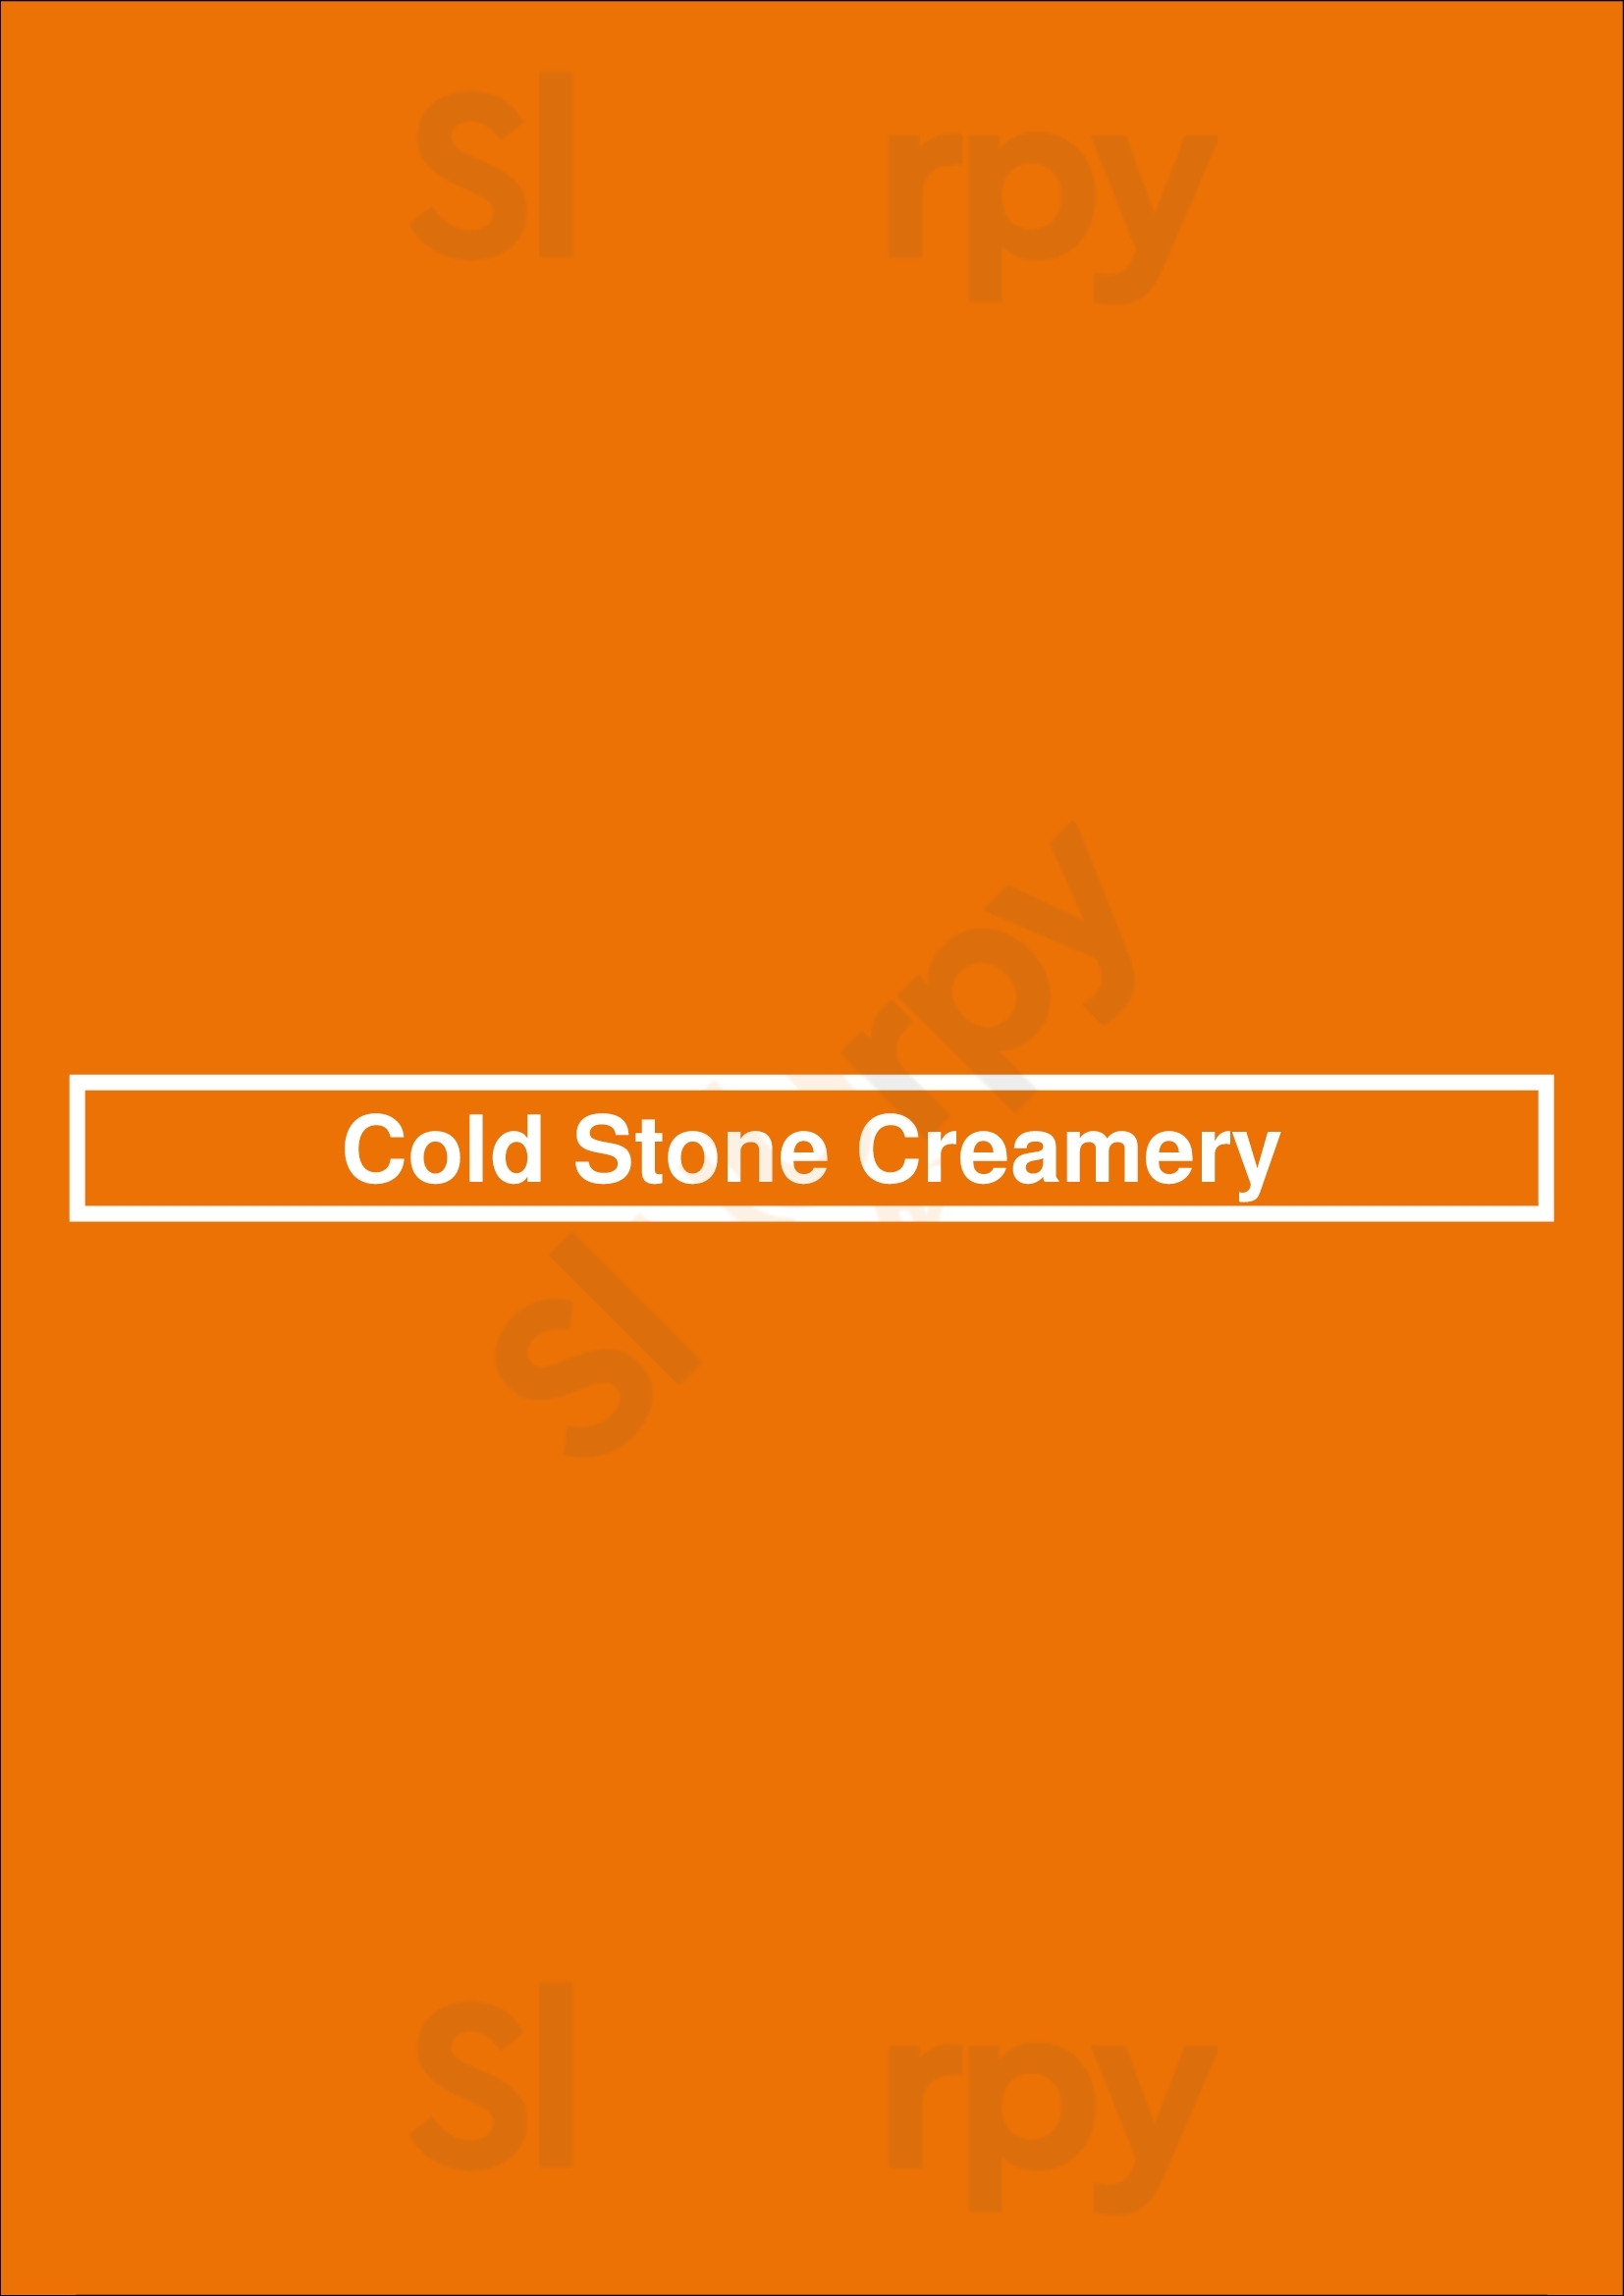 Cold Stone Creamery Arlington Menu - 1